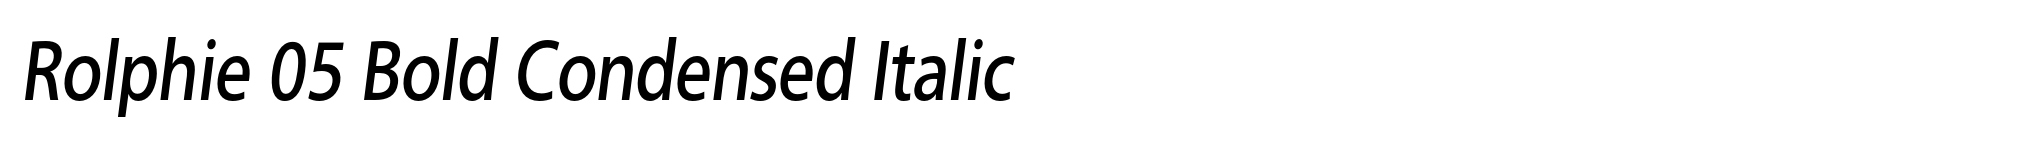 Rolphie 05 Bold Condensed Italic image